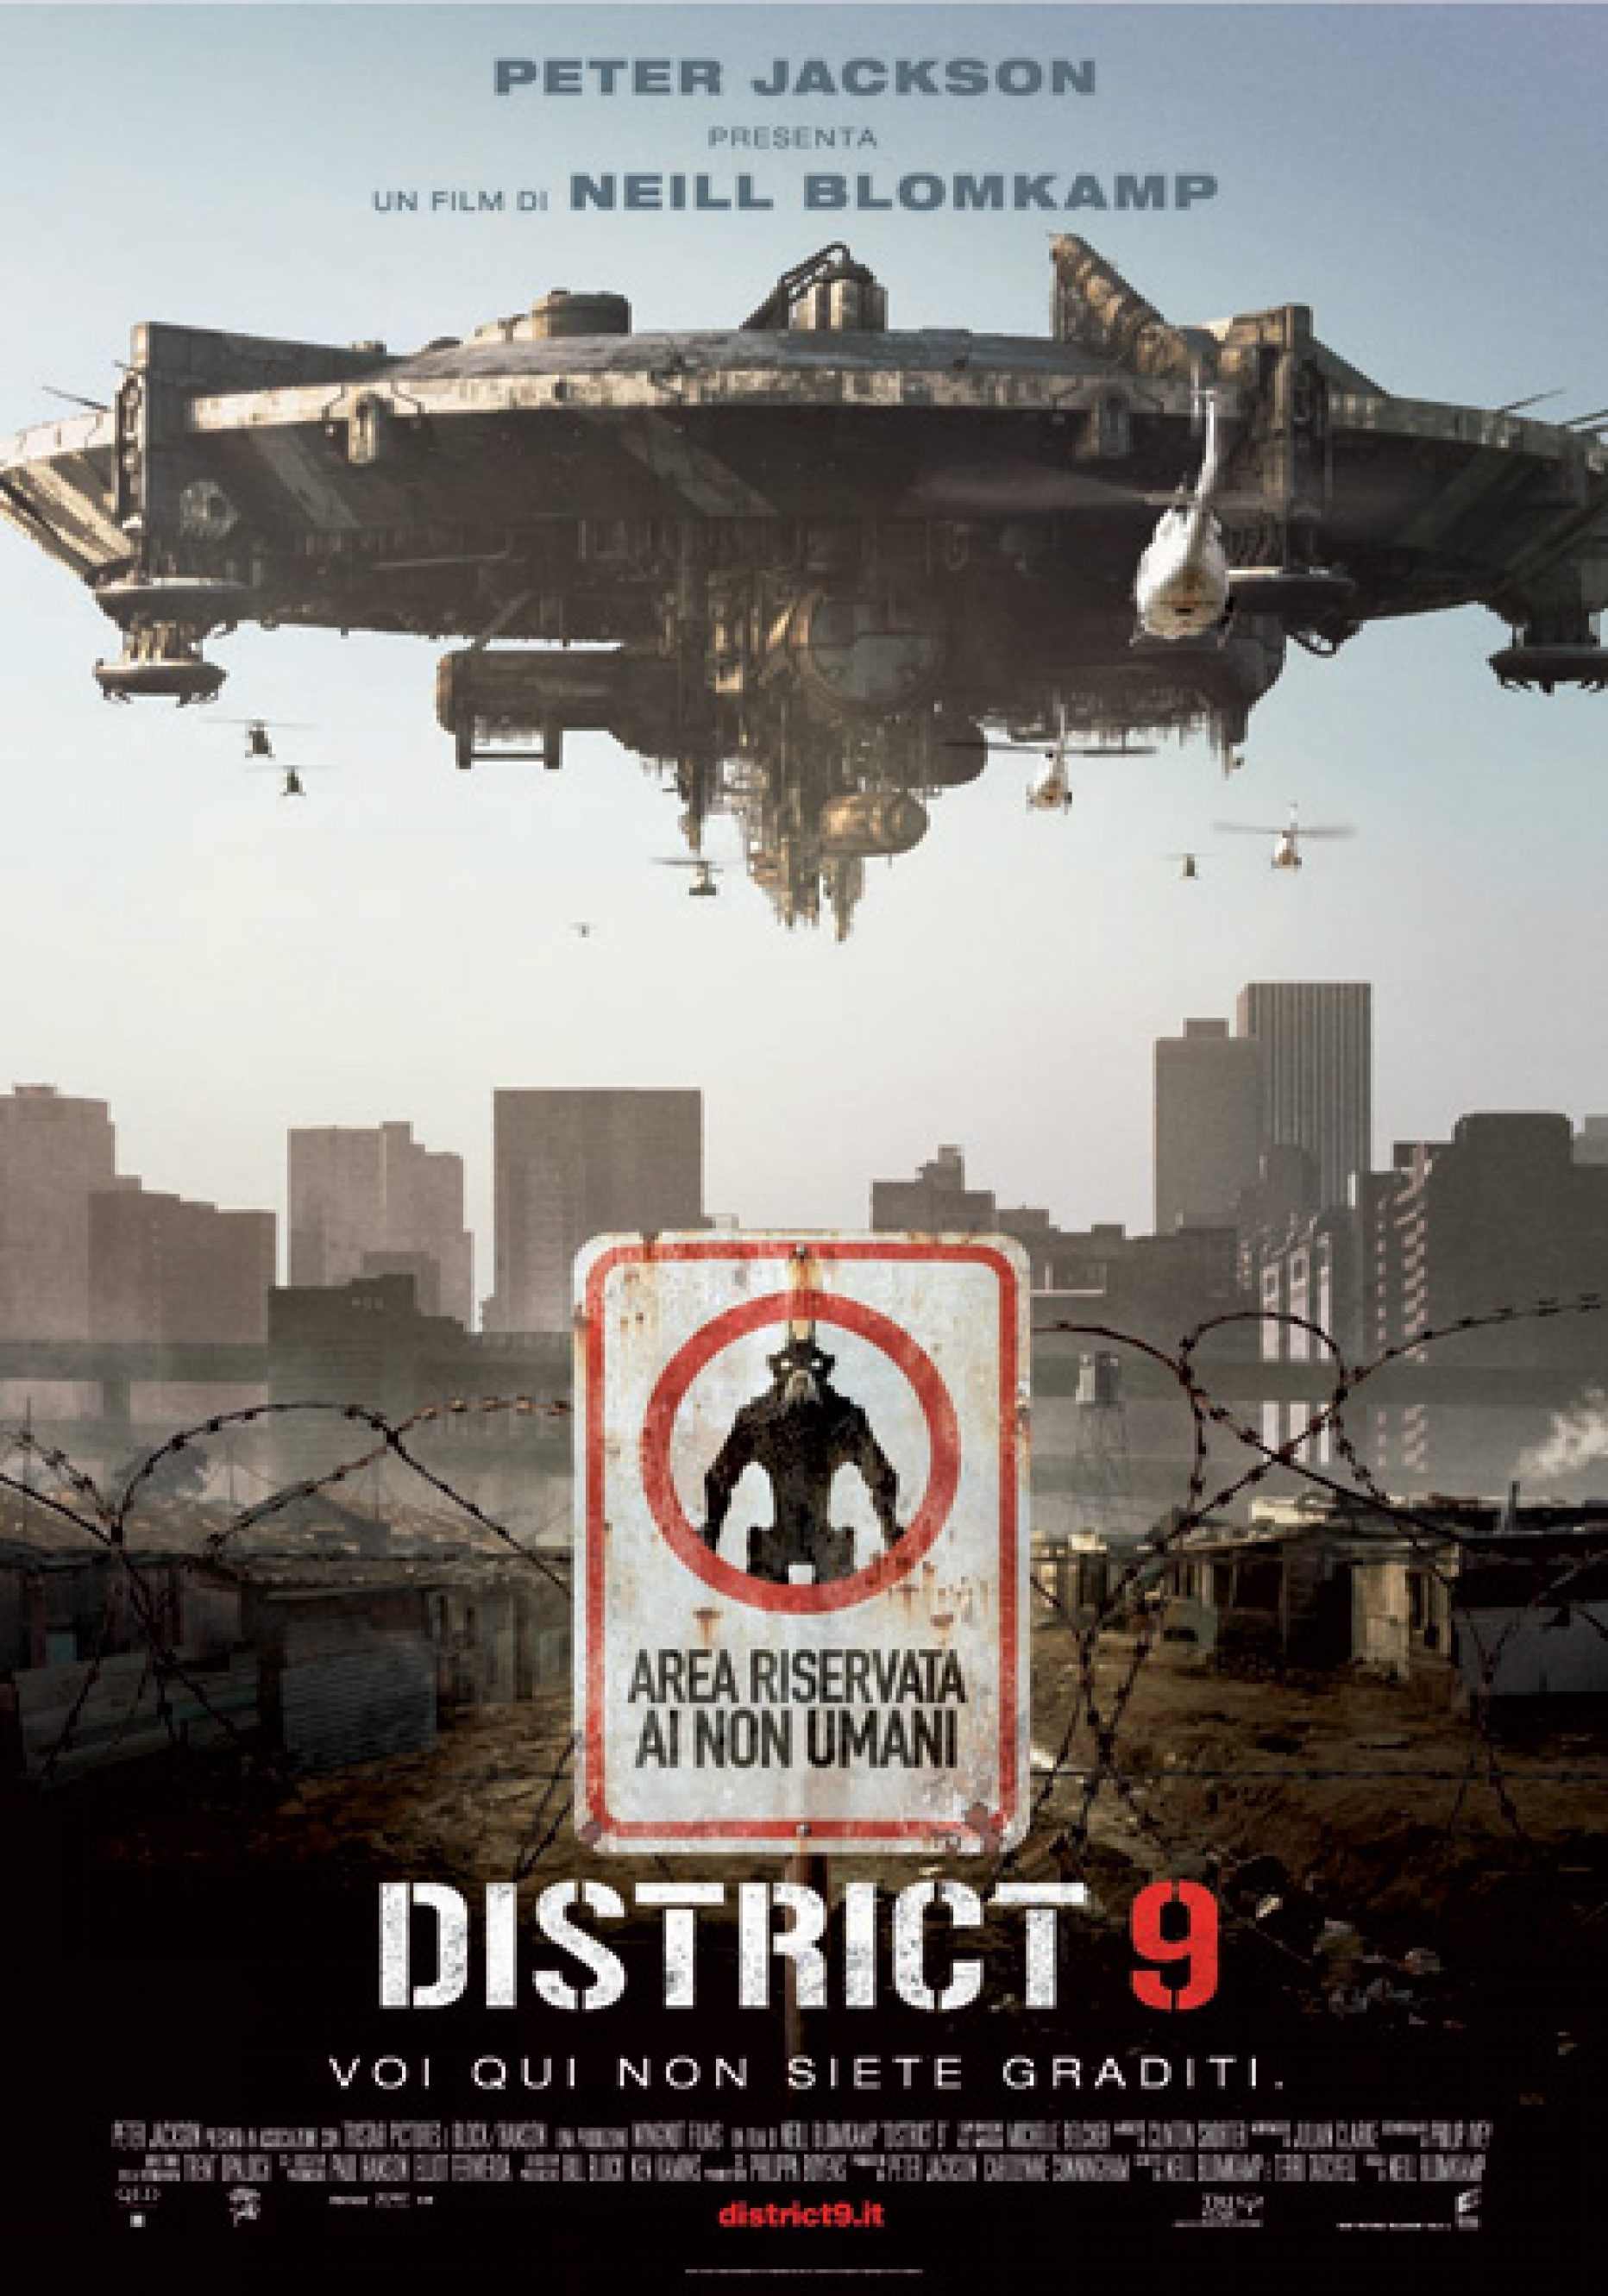 District 9 (Blomkamp, 2009)